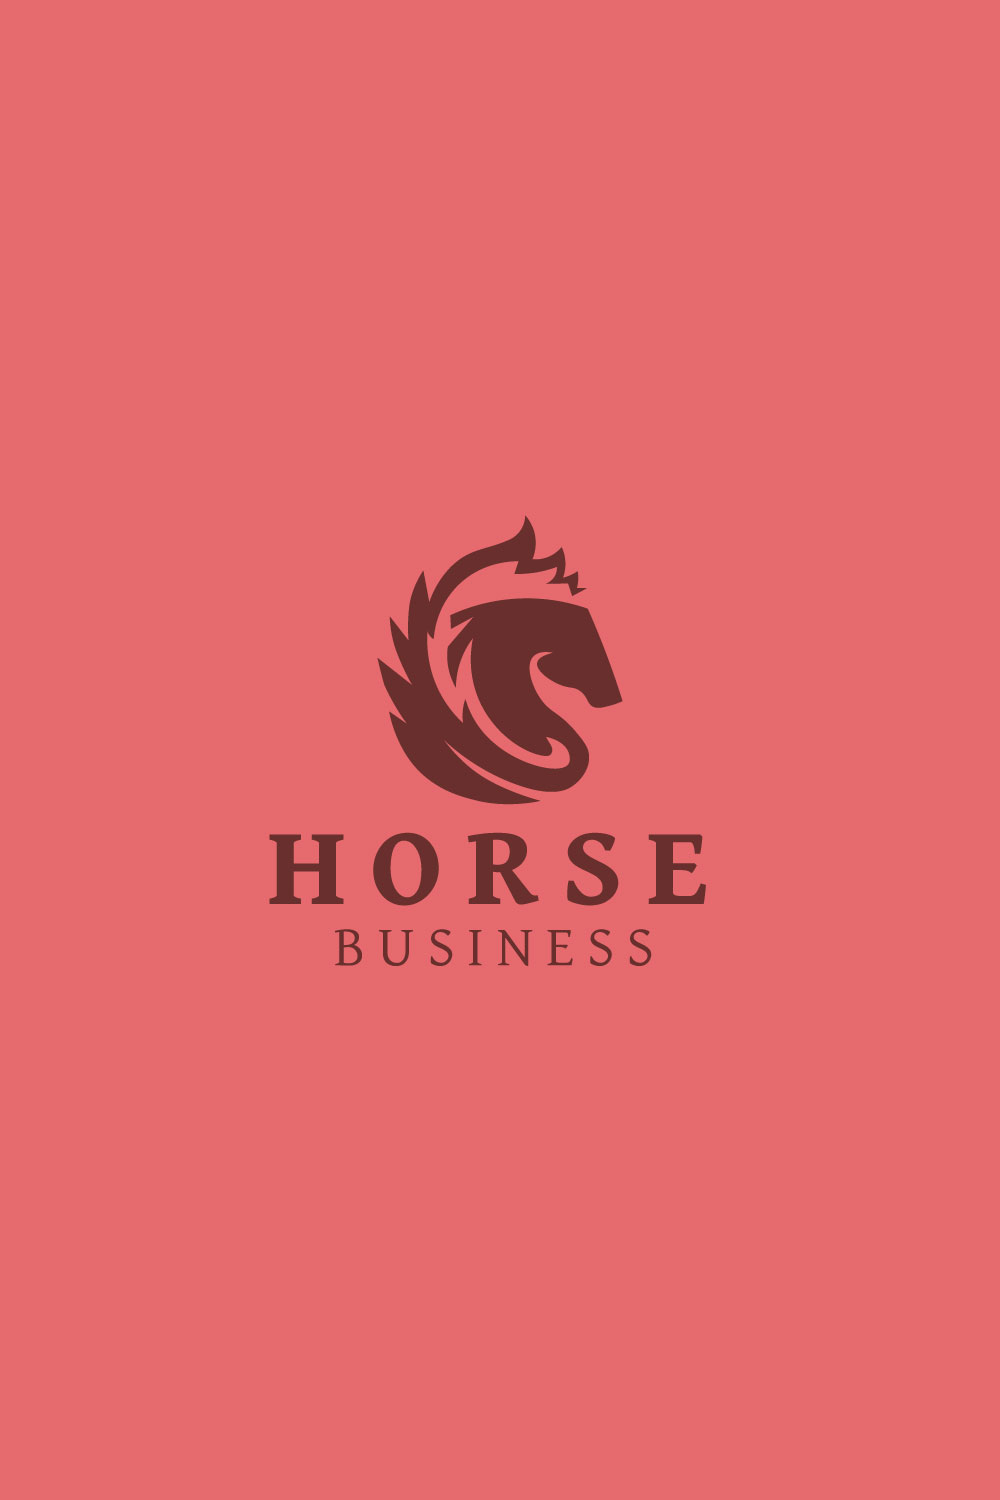 Fire Horse Logo design pinterest preview image.